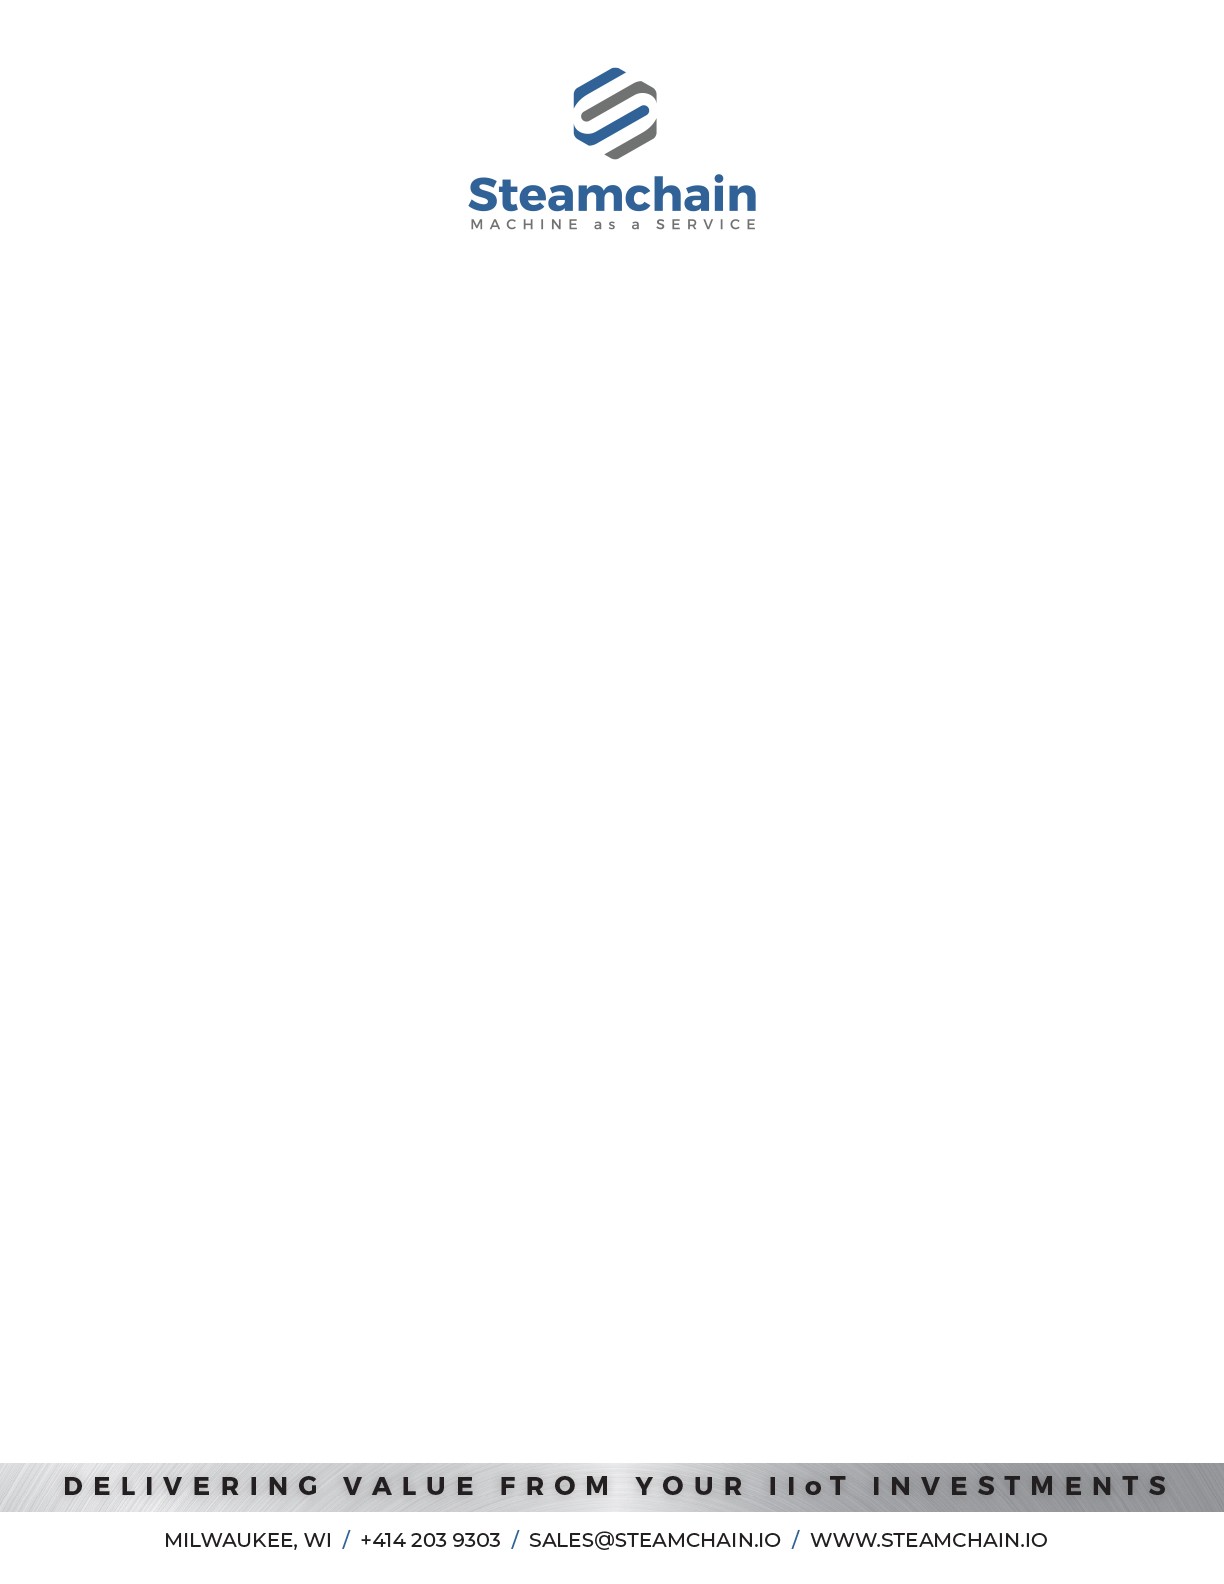 Steamchain letterhead